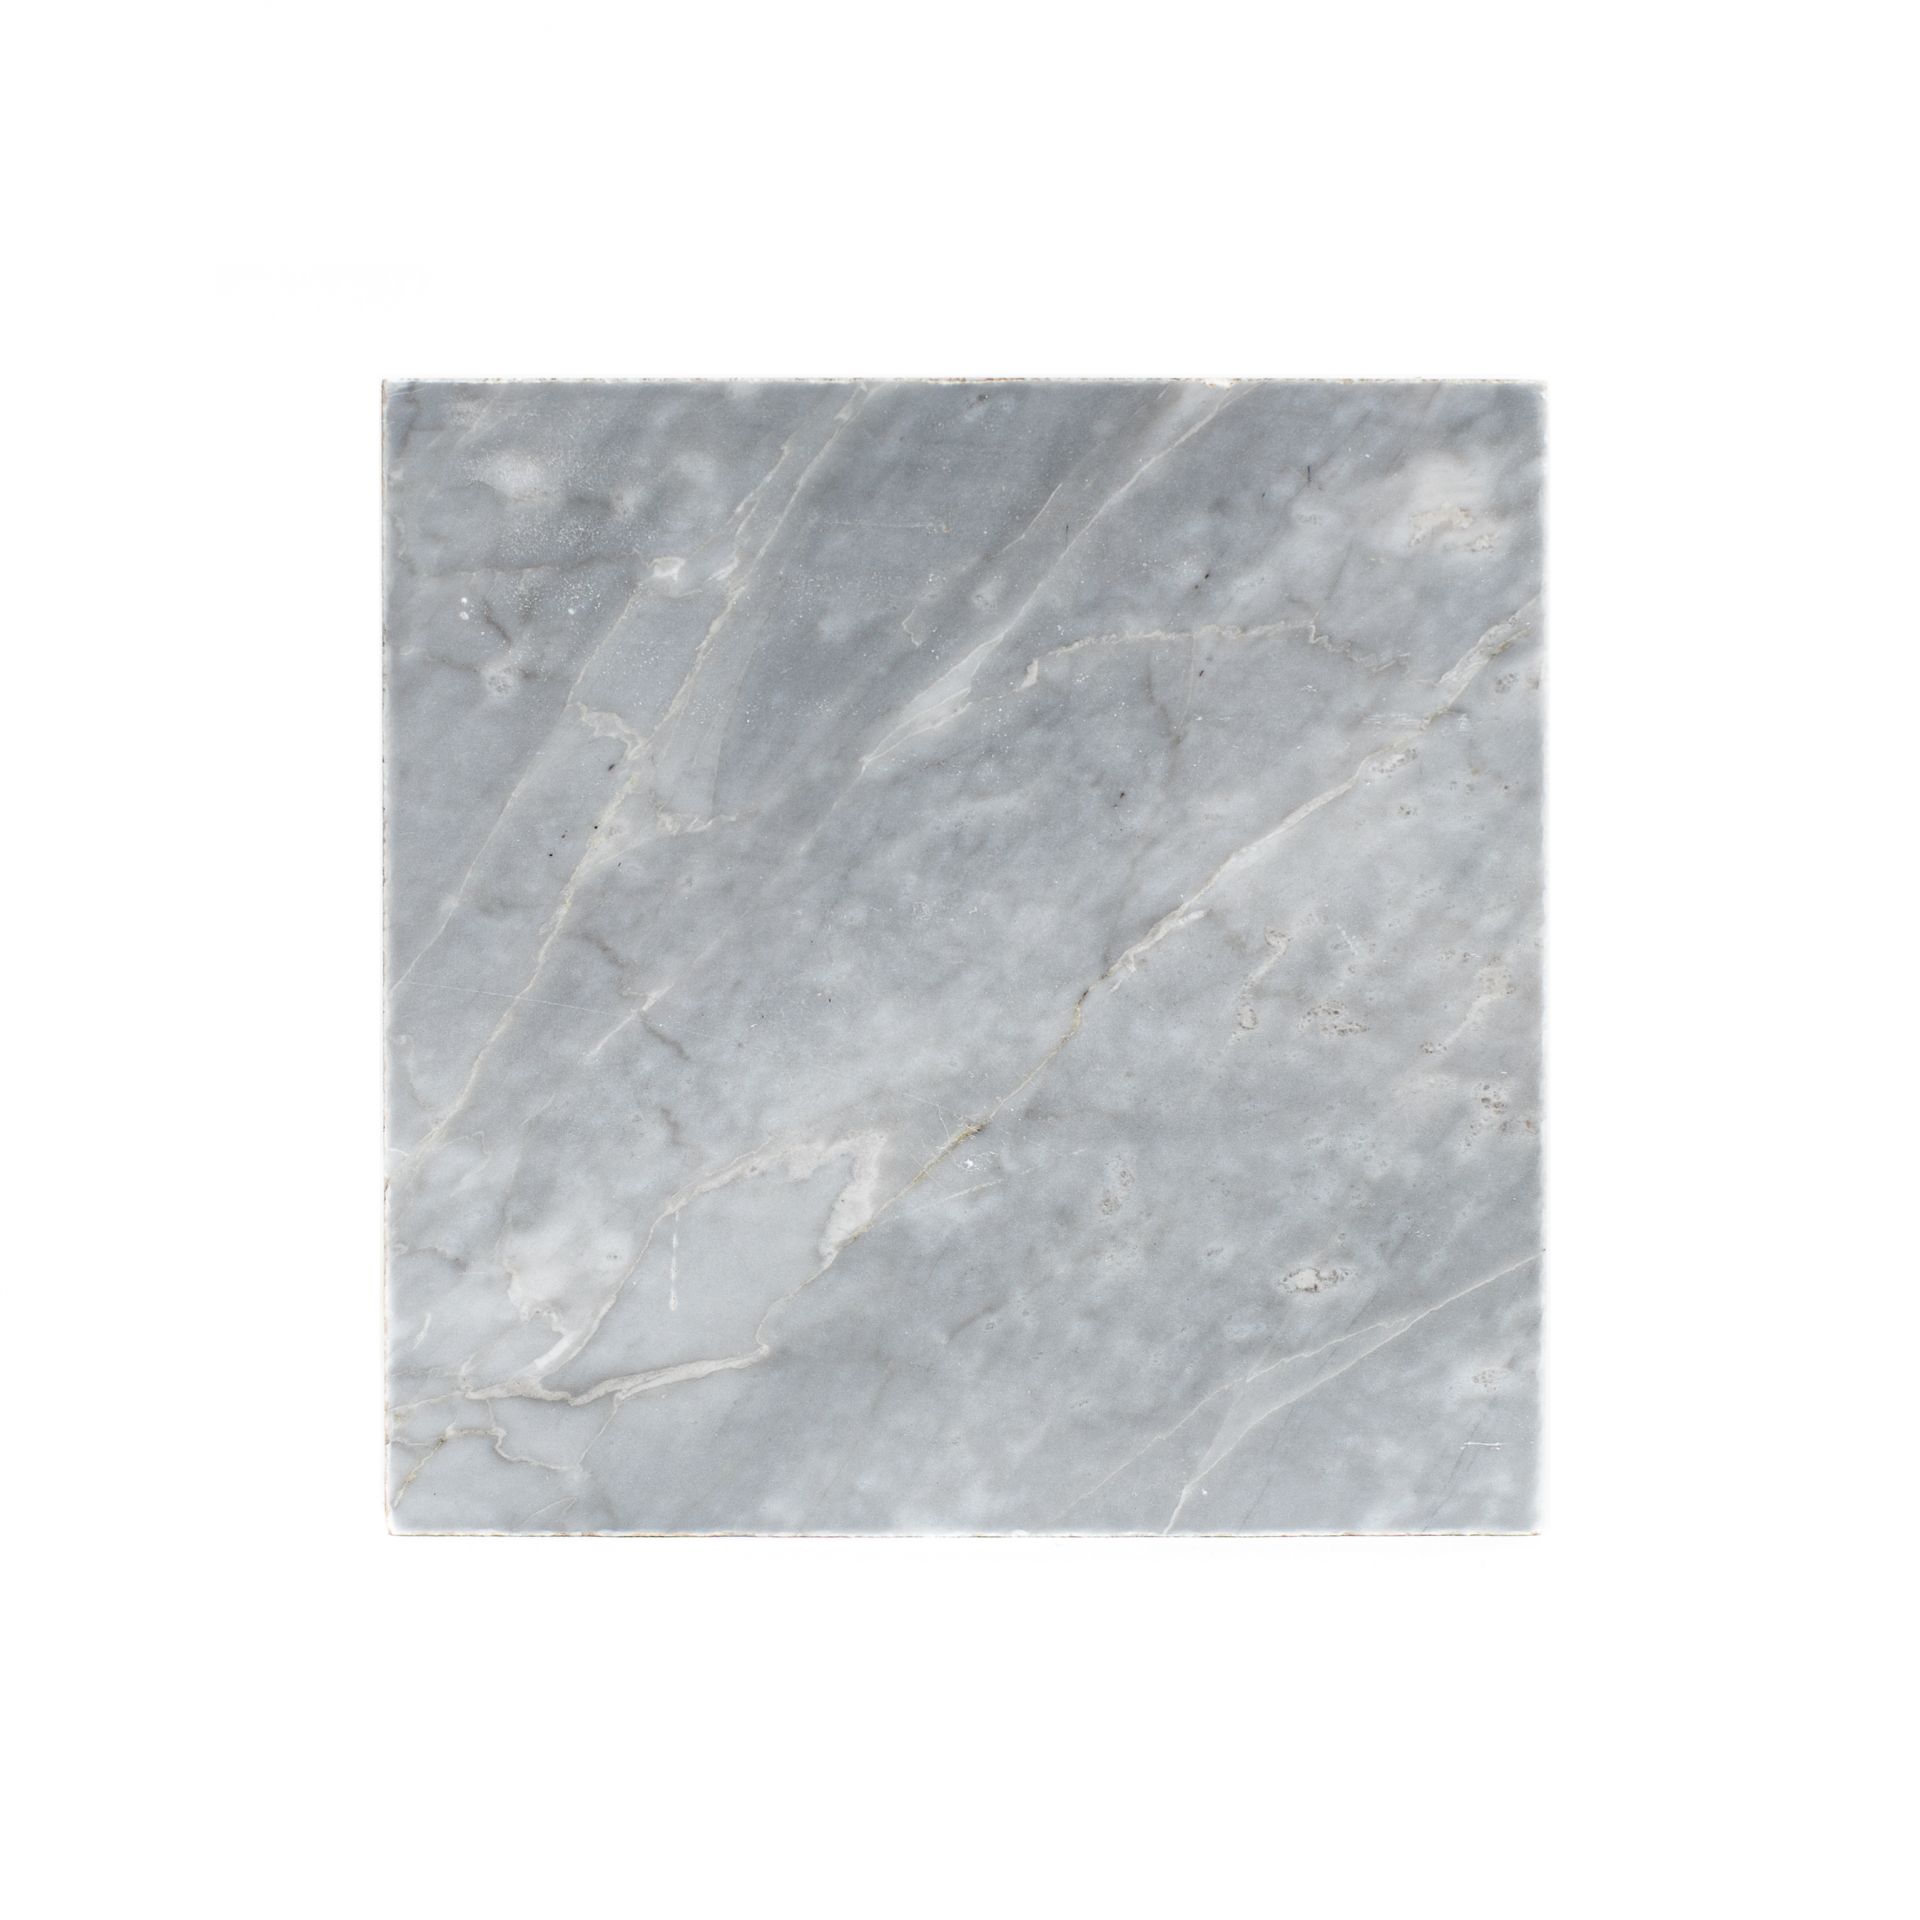 Mramor grigio apuano - Dlažby a obklady z přírodního kamene Bricks & Cotto experts